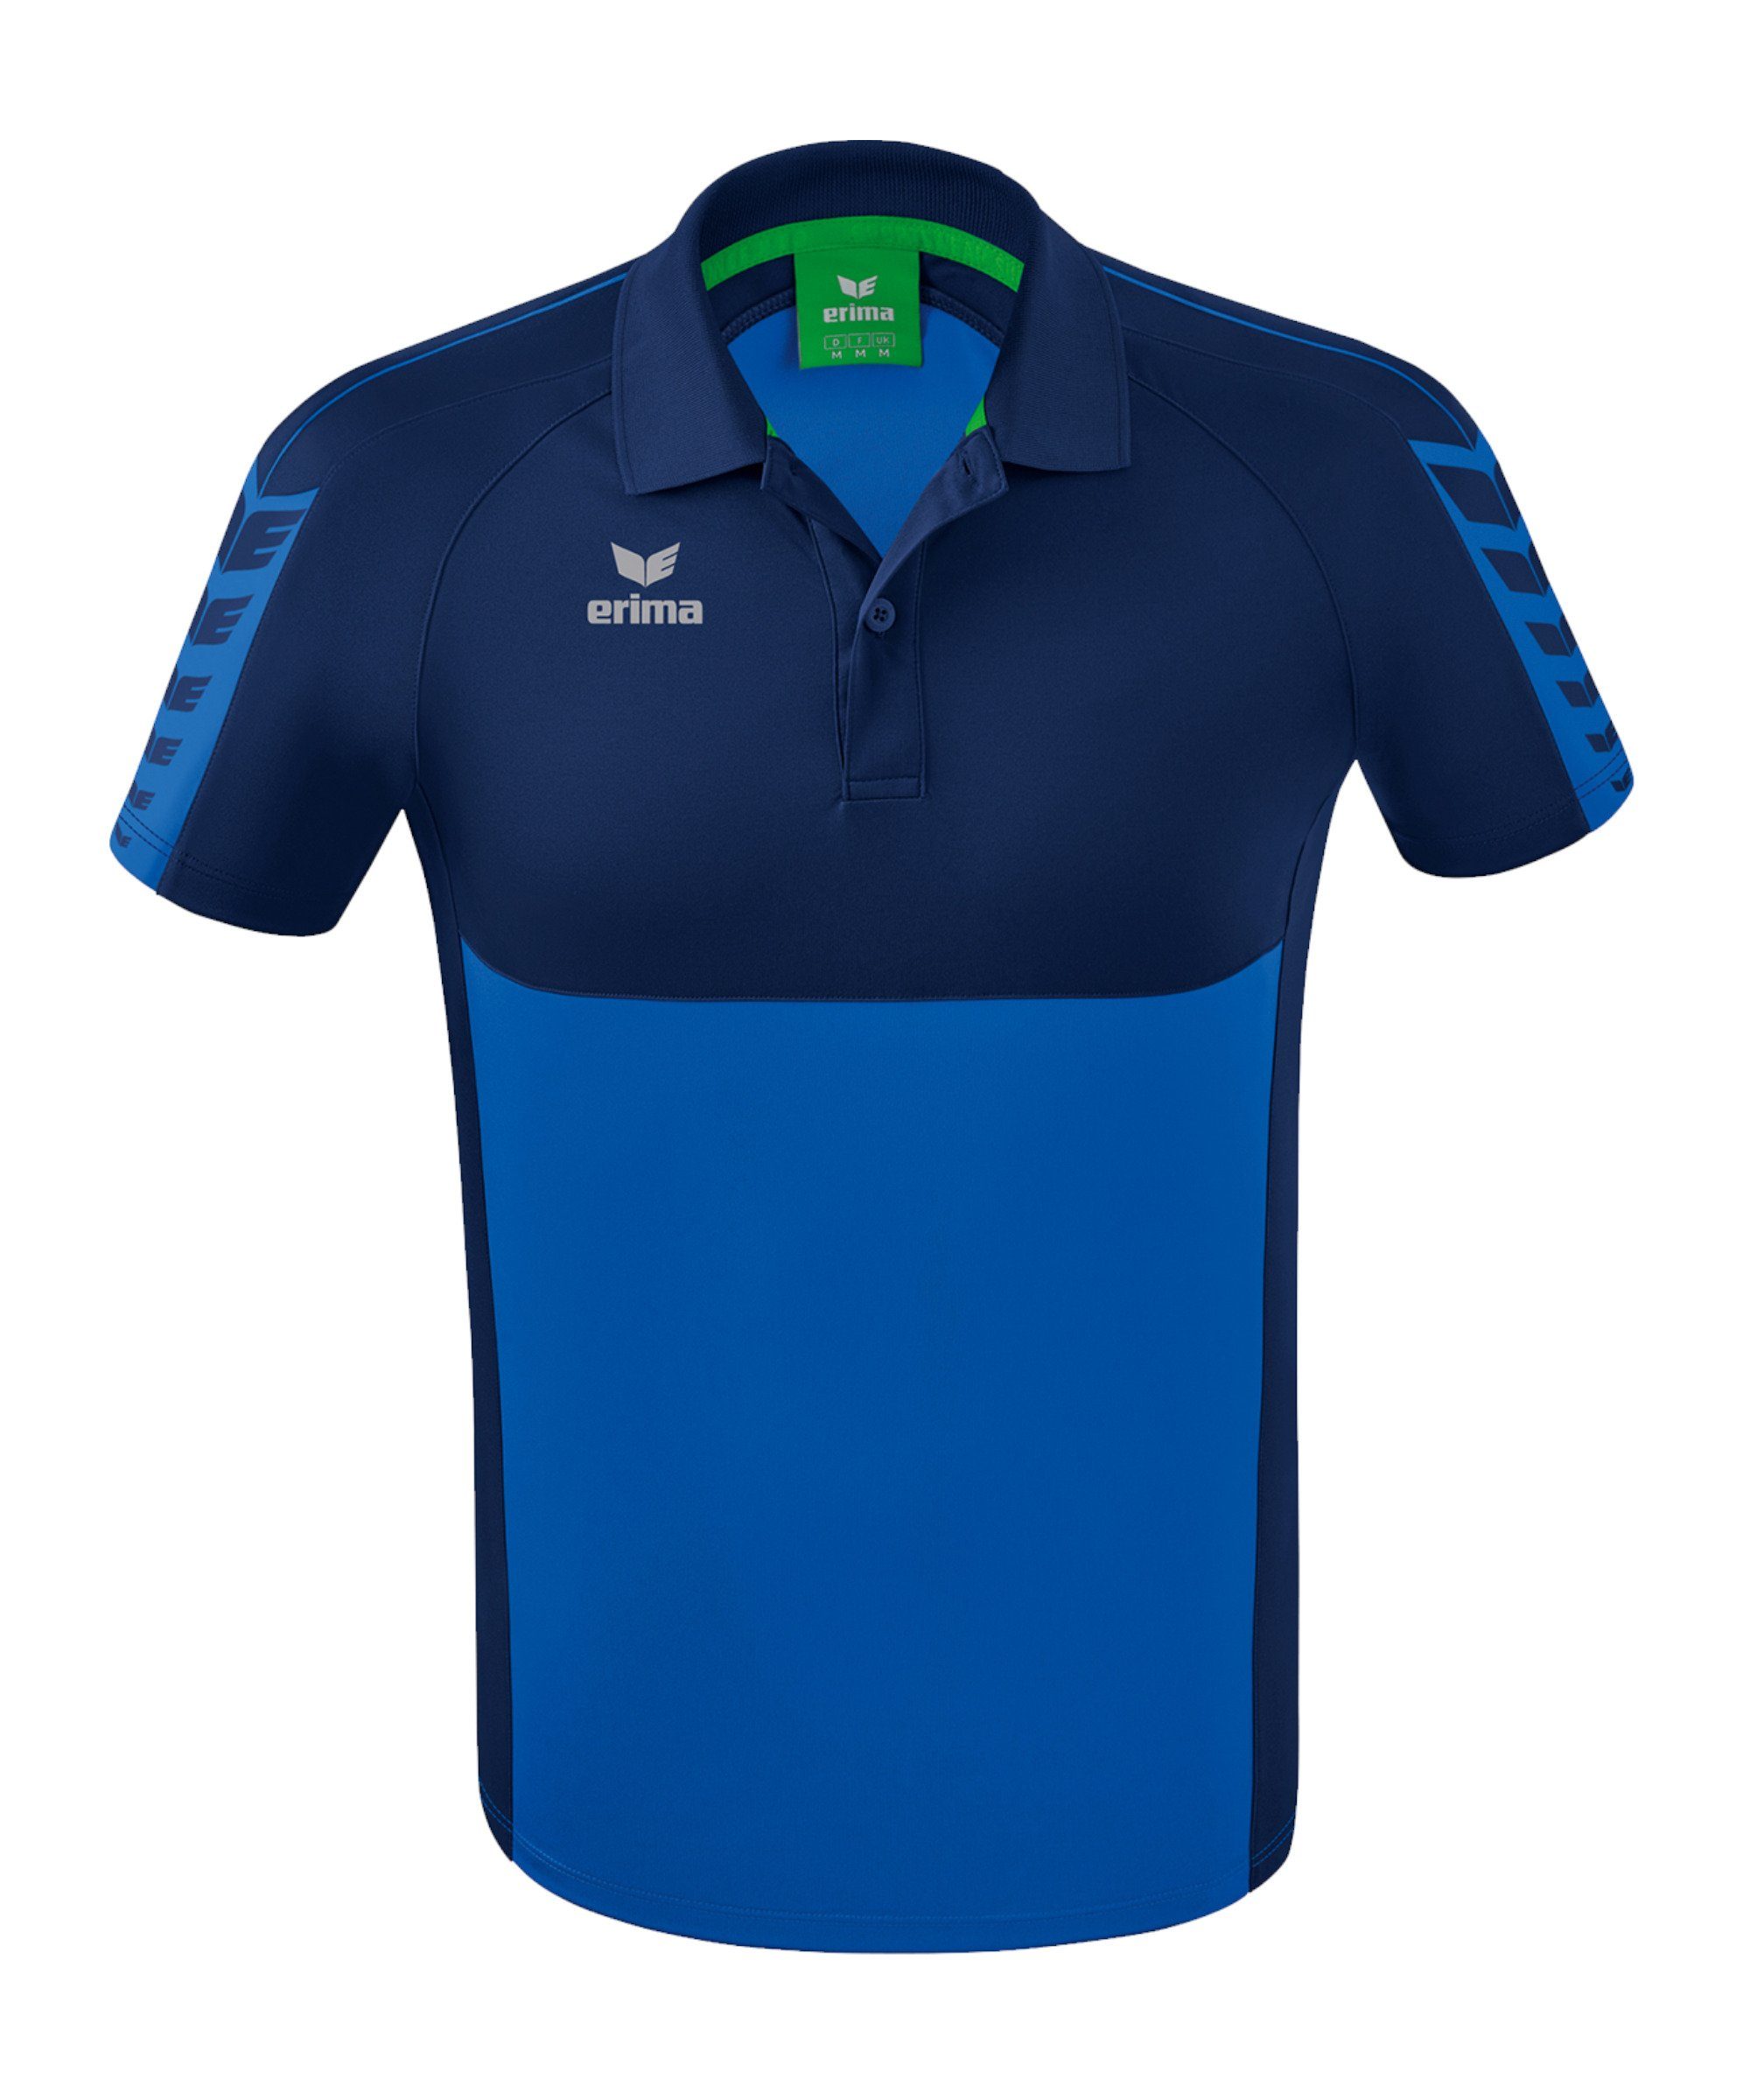 Wings Erima Poloshirt blaublau default T-Shirt Six